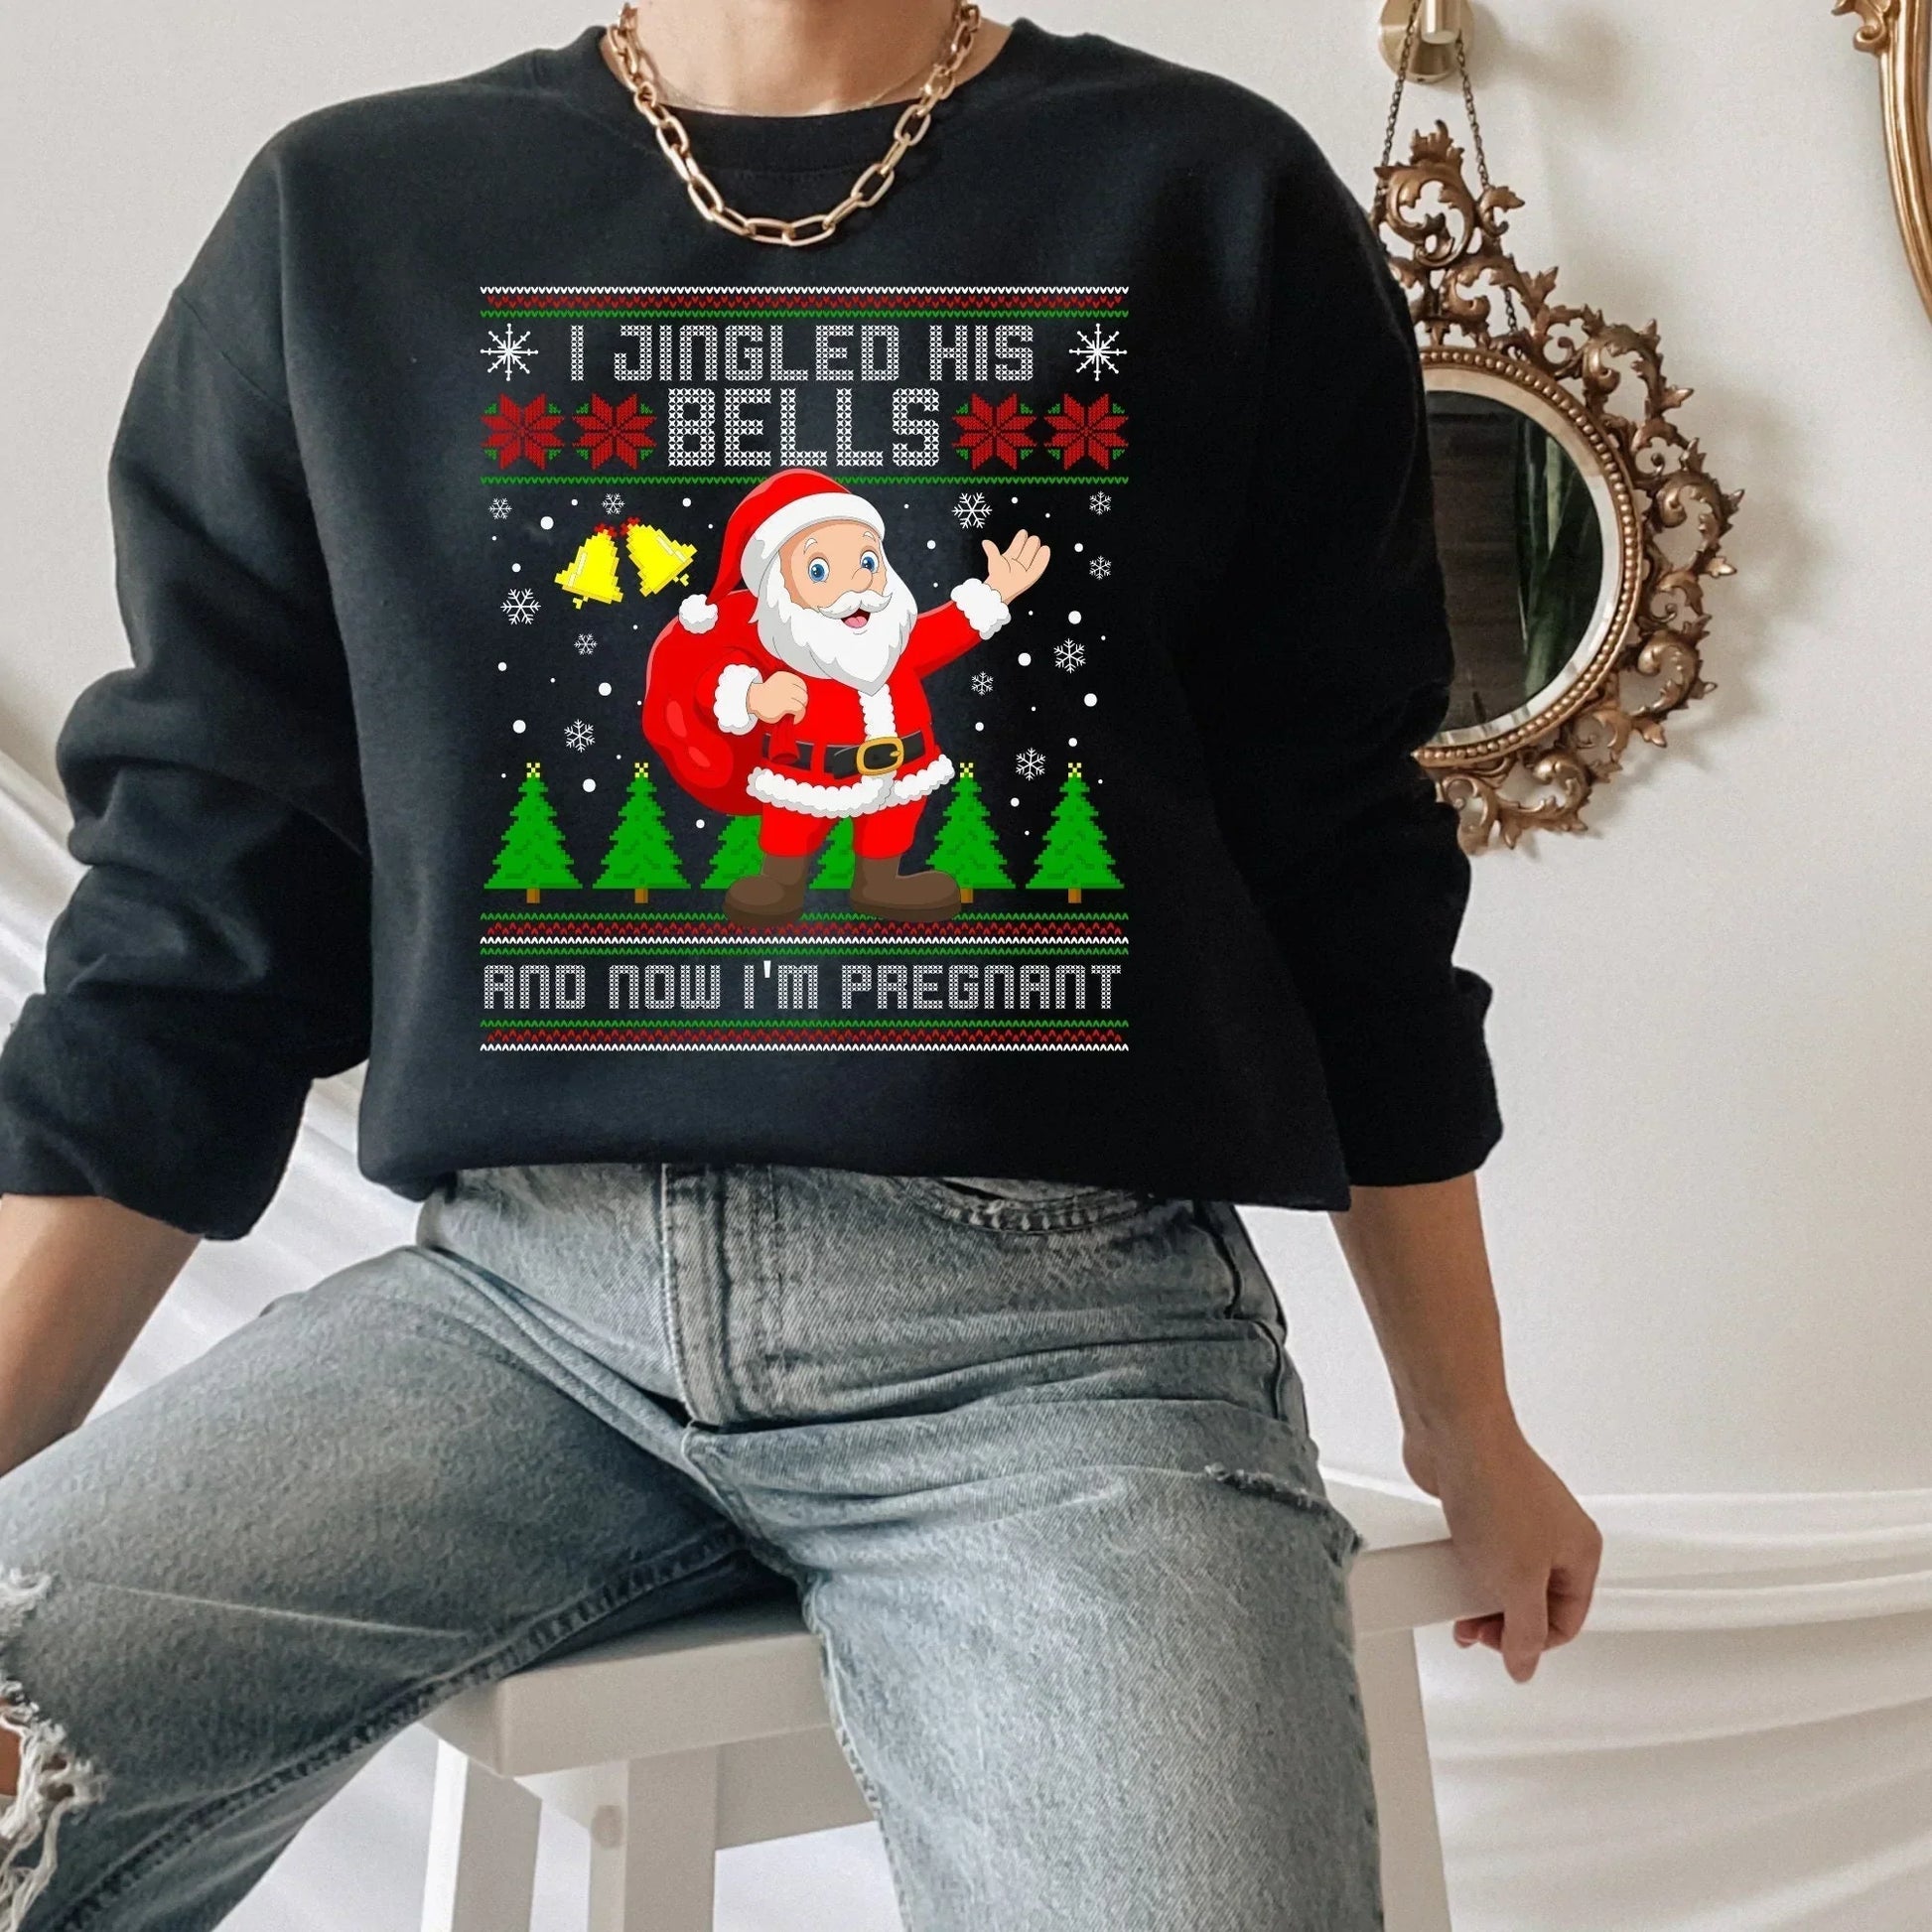 I Jingled His Bells, Now I'm Pregnant, Funny Christmas Pregnancy Reveal Shirt